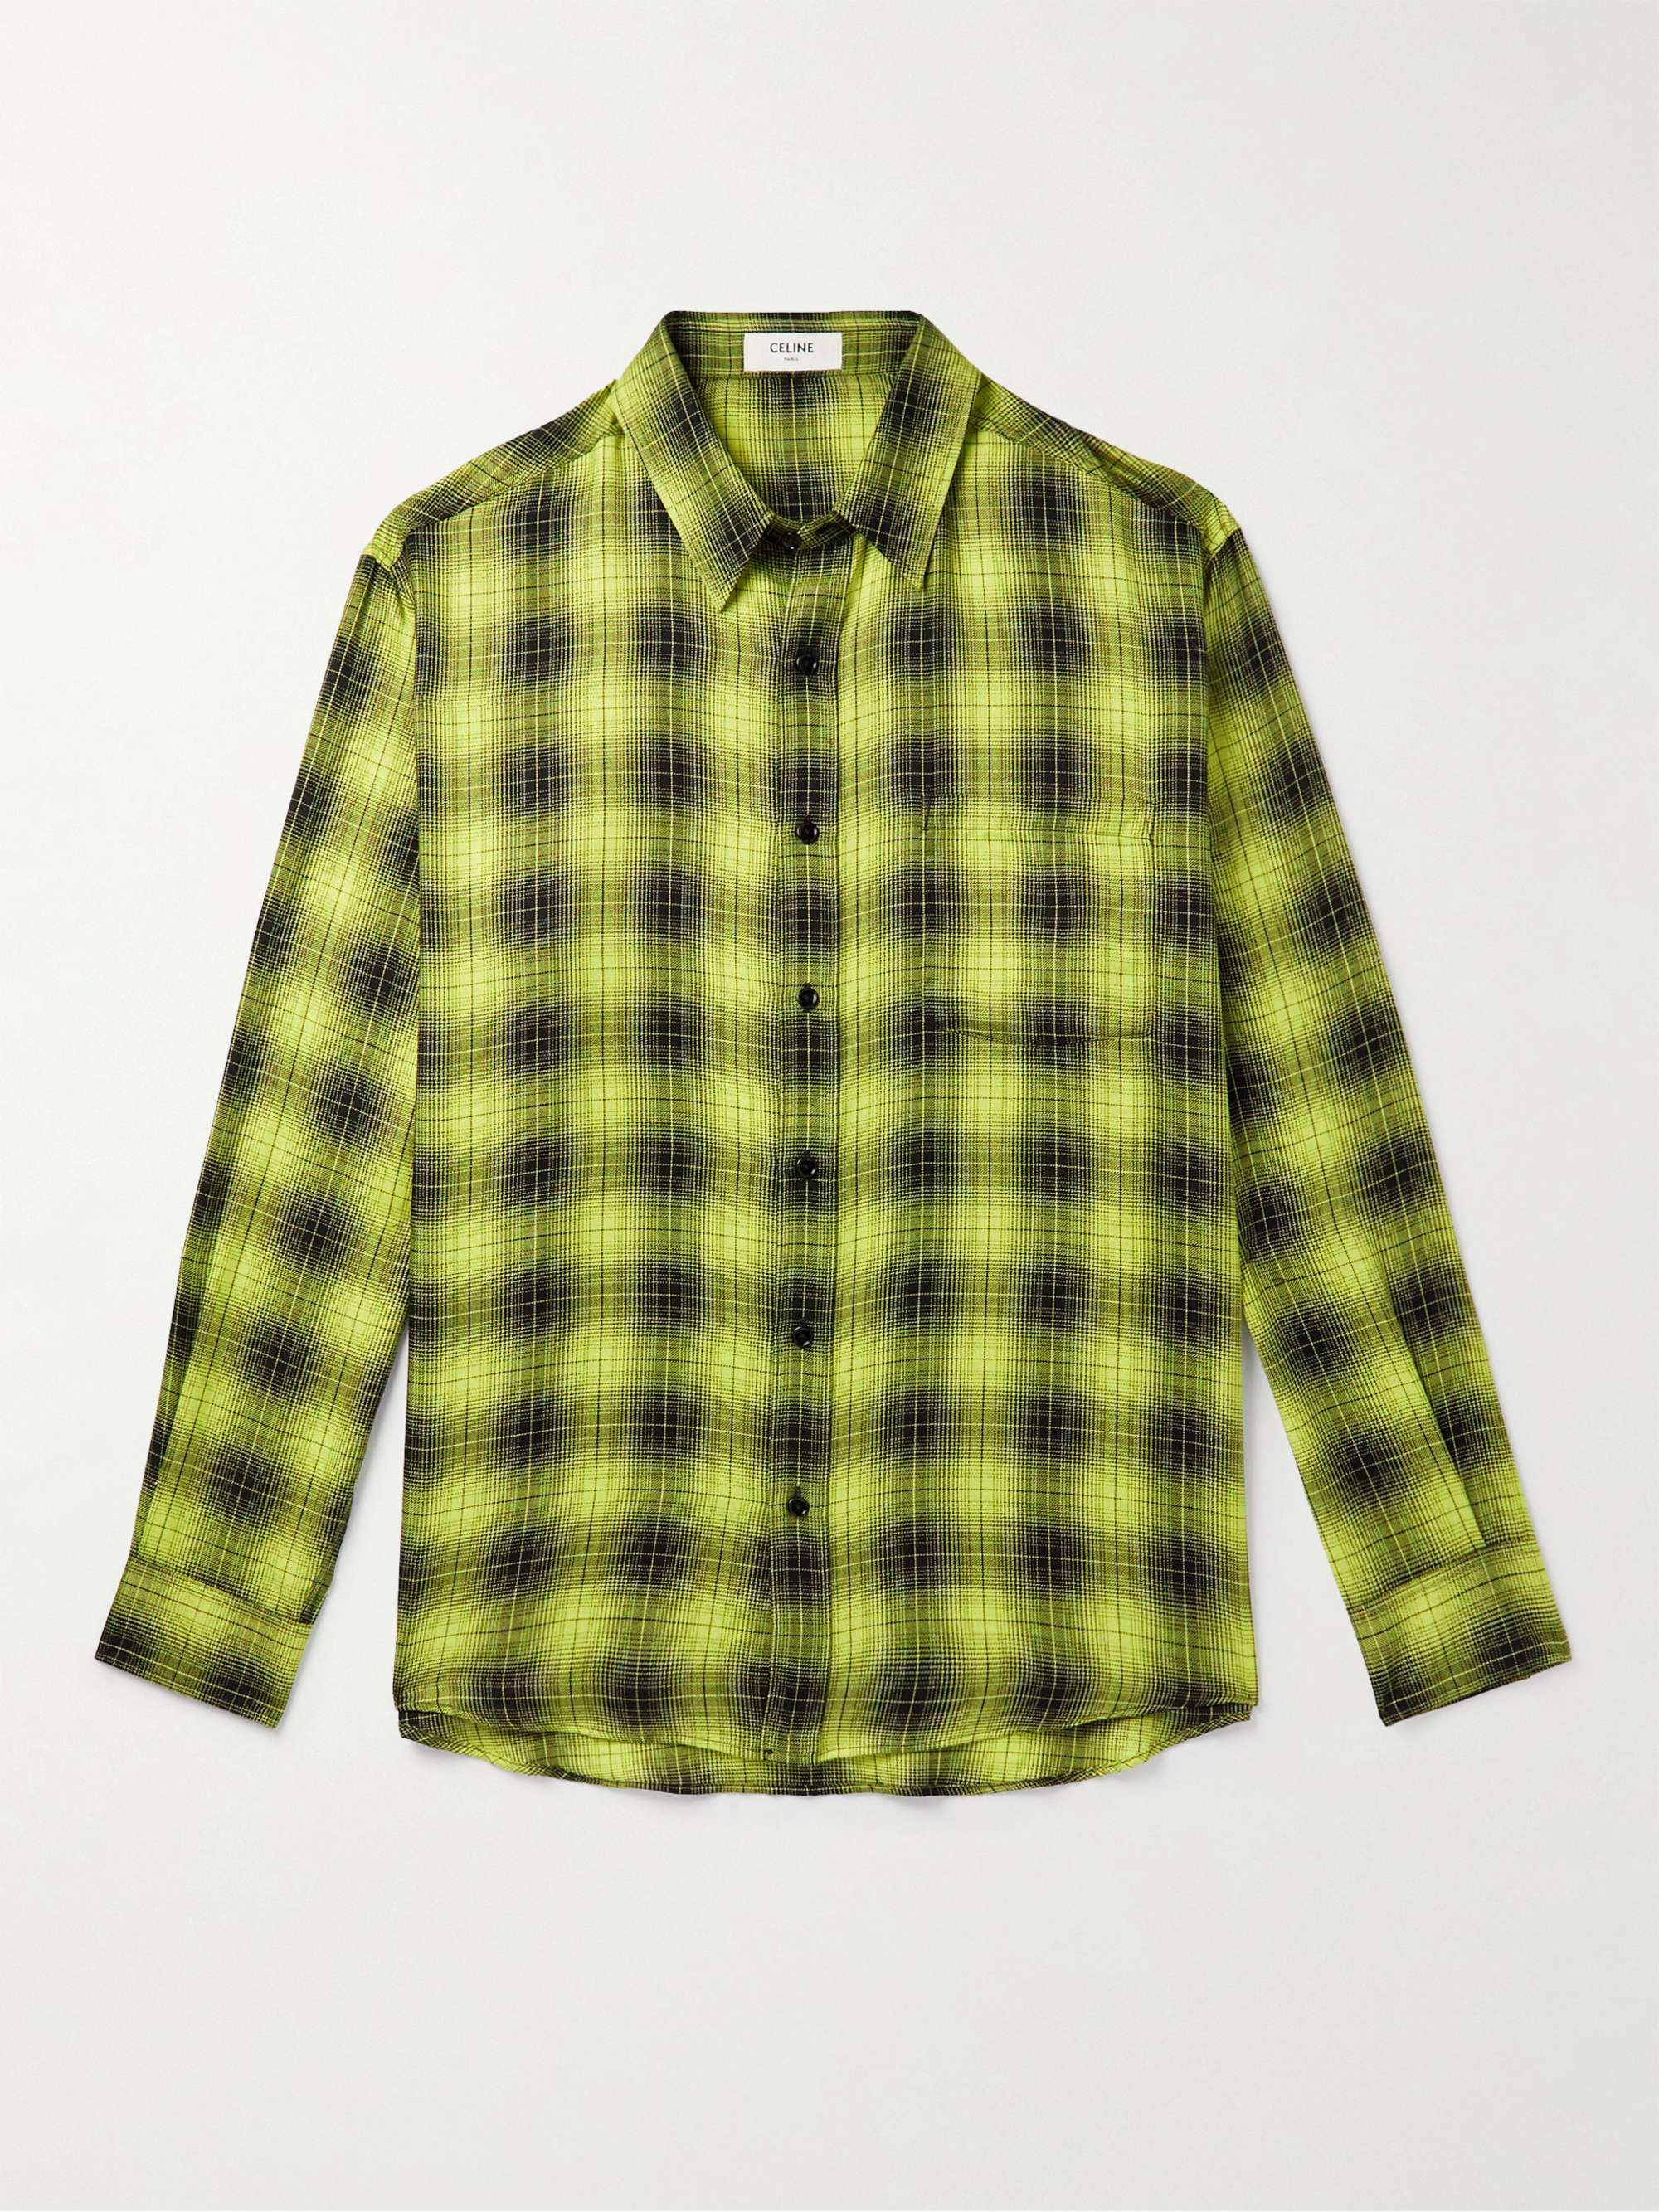 CELINE HOMME Checked Cotton-Flannel Shirt for Men | MR PORTER